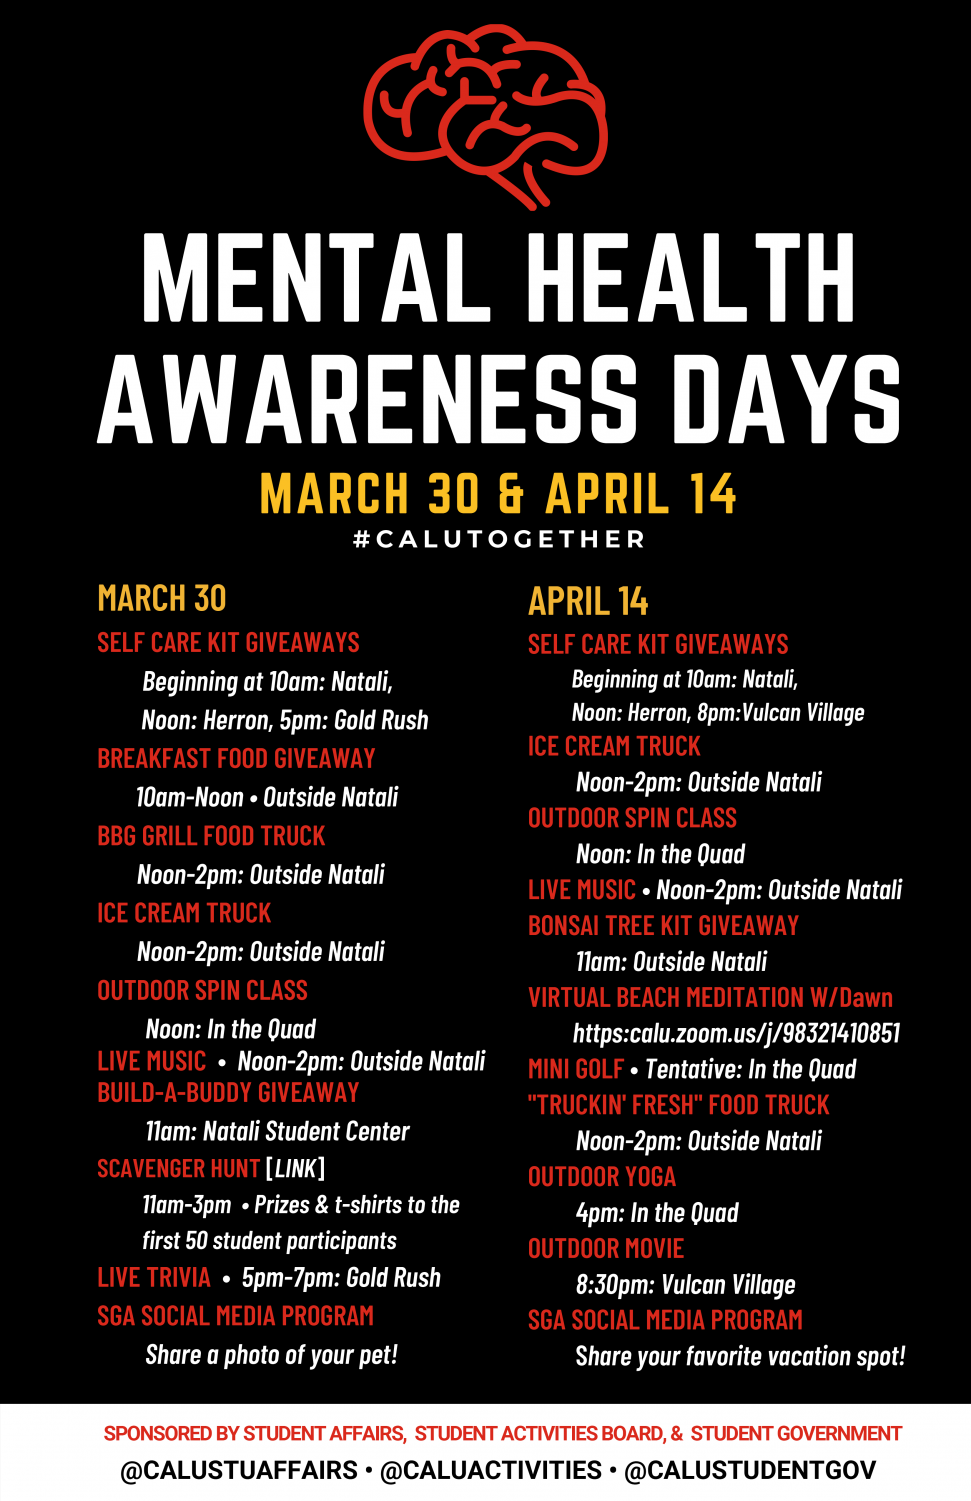 "Mental Health Awareness Days" at Cal U to include outdoor activities